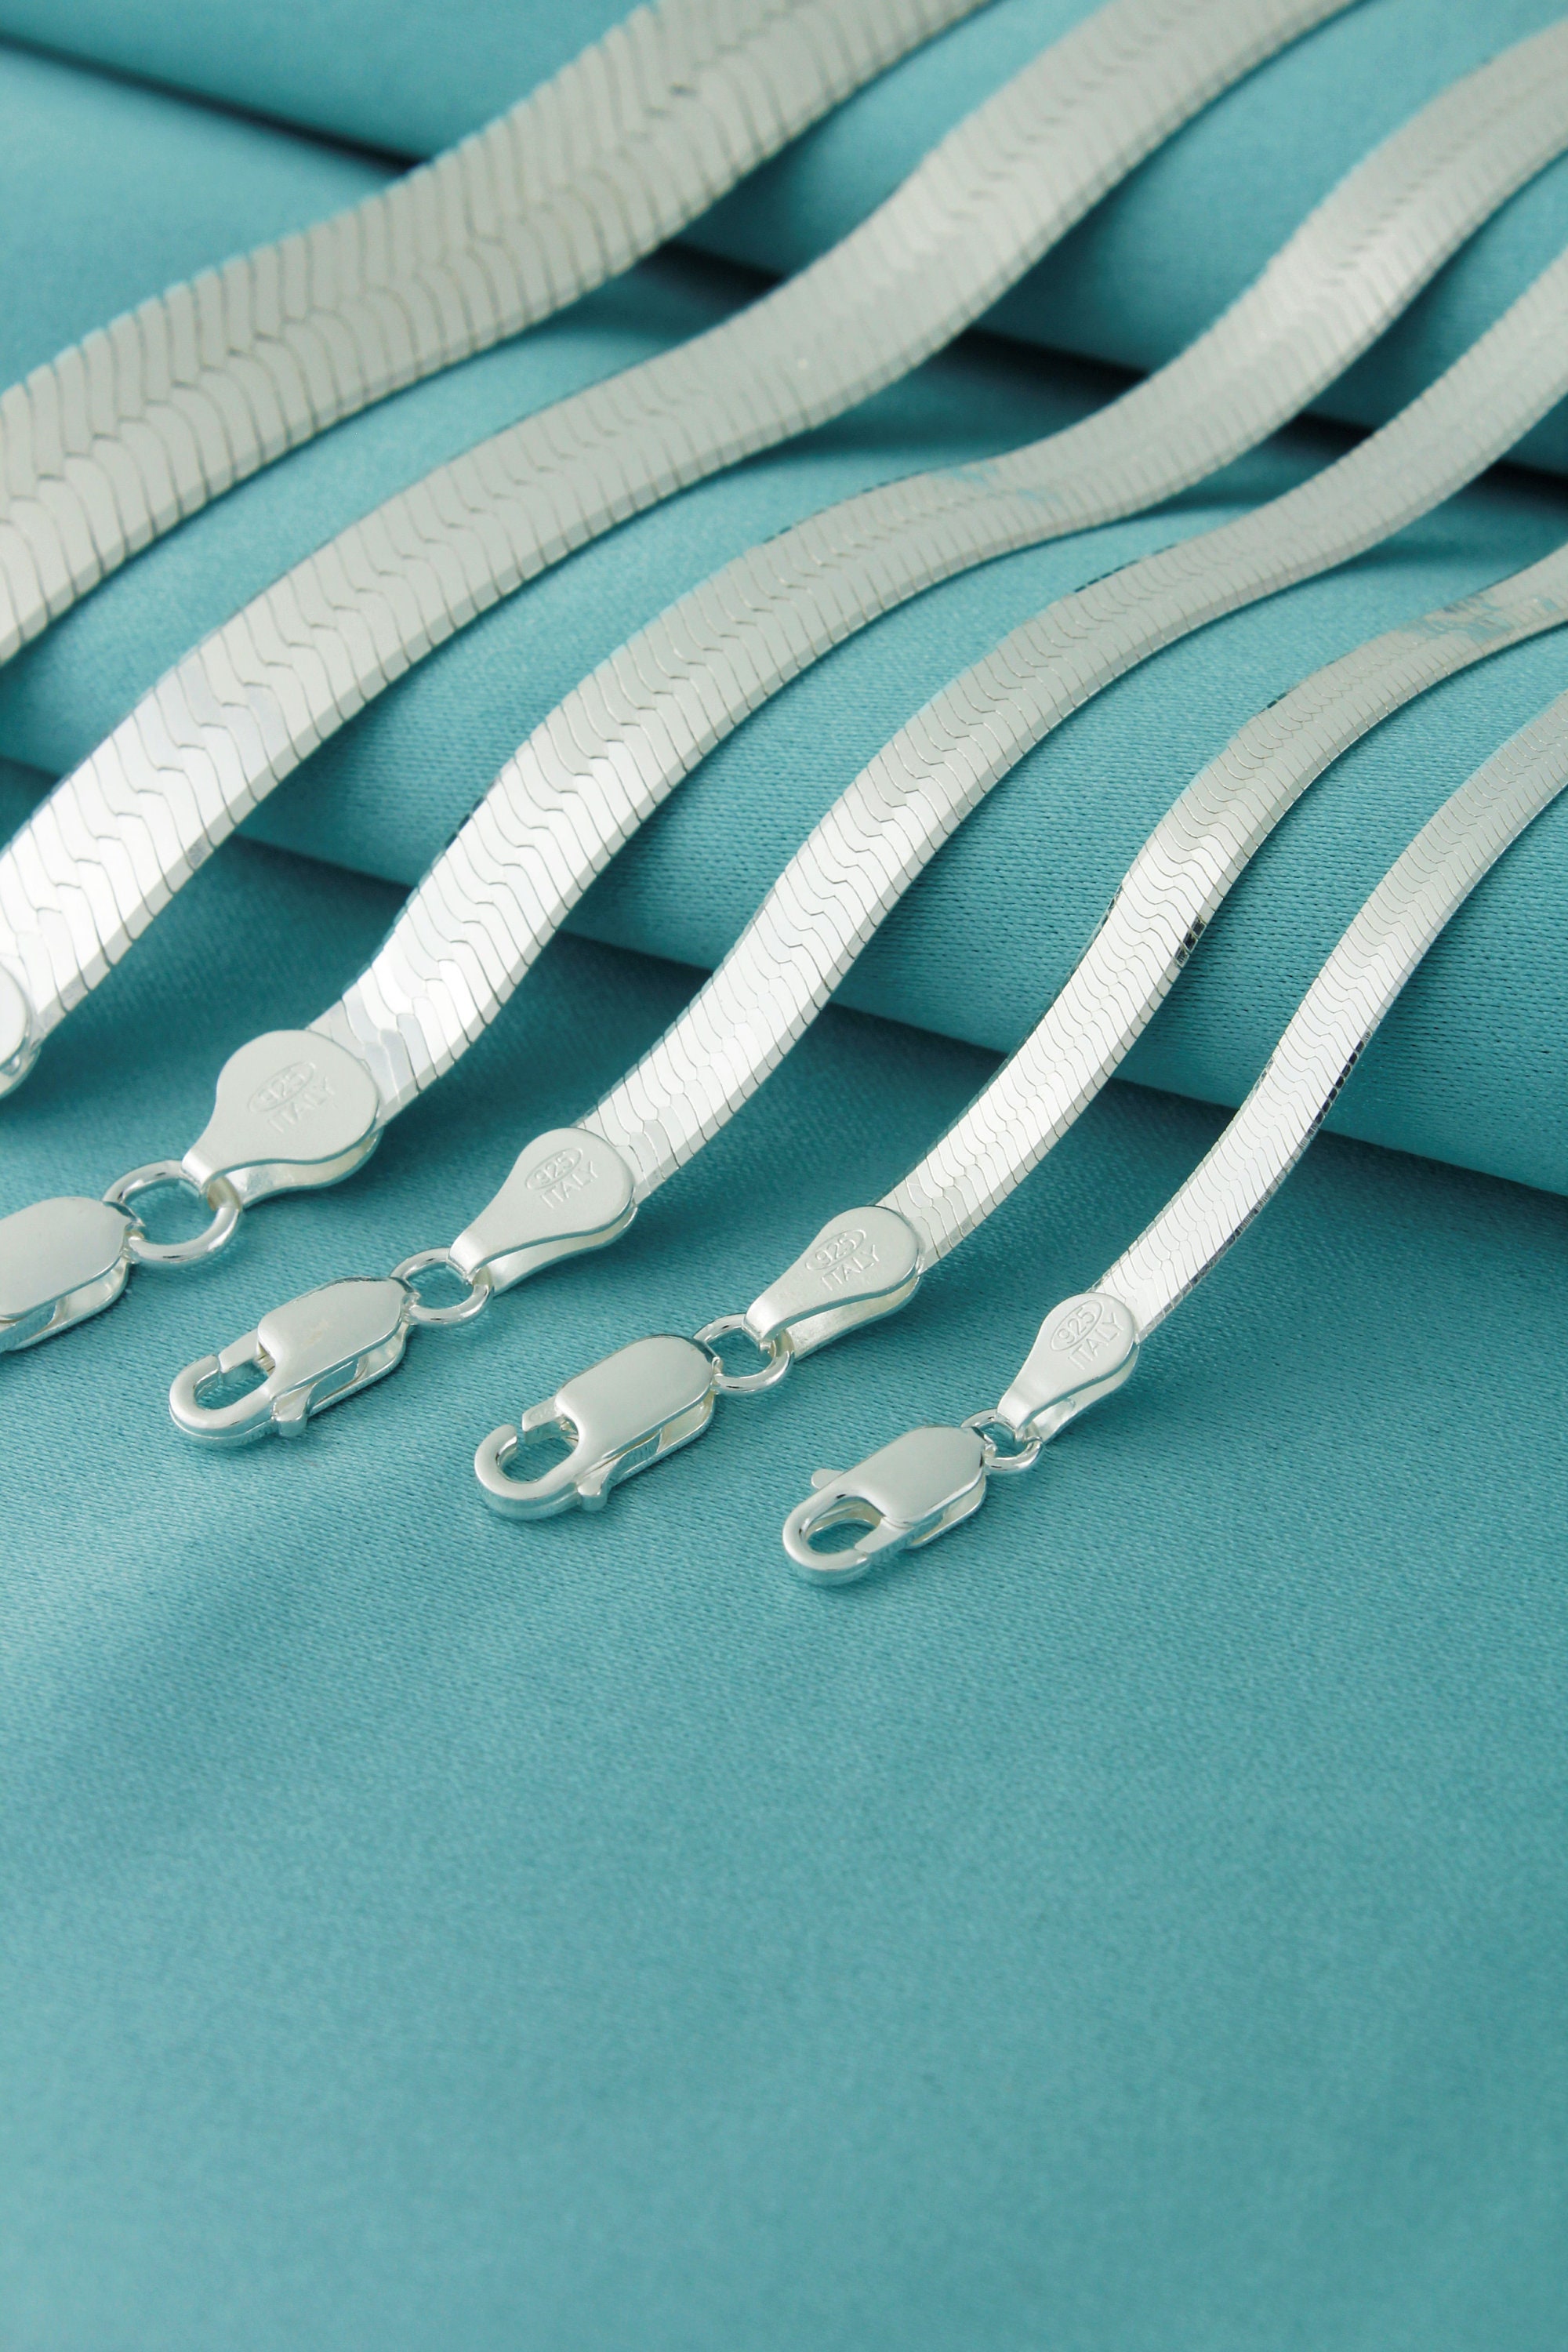 Waterproof Flat Snake Chain Necklace 2MM 3MM 4MM 5MM Gold Silver  Herringbone Stainless Steel Chain For Women Jewelry Gift - AliExpress